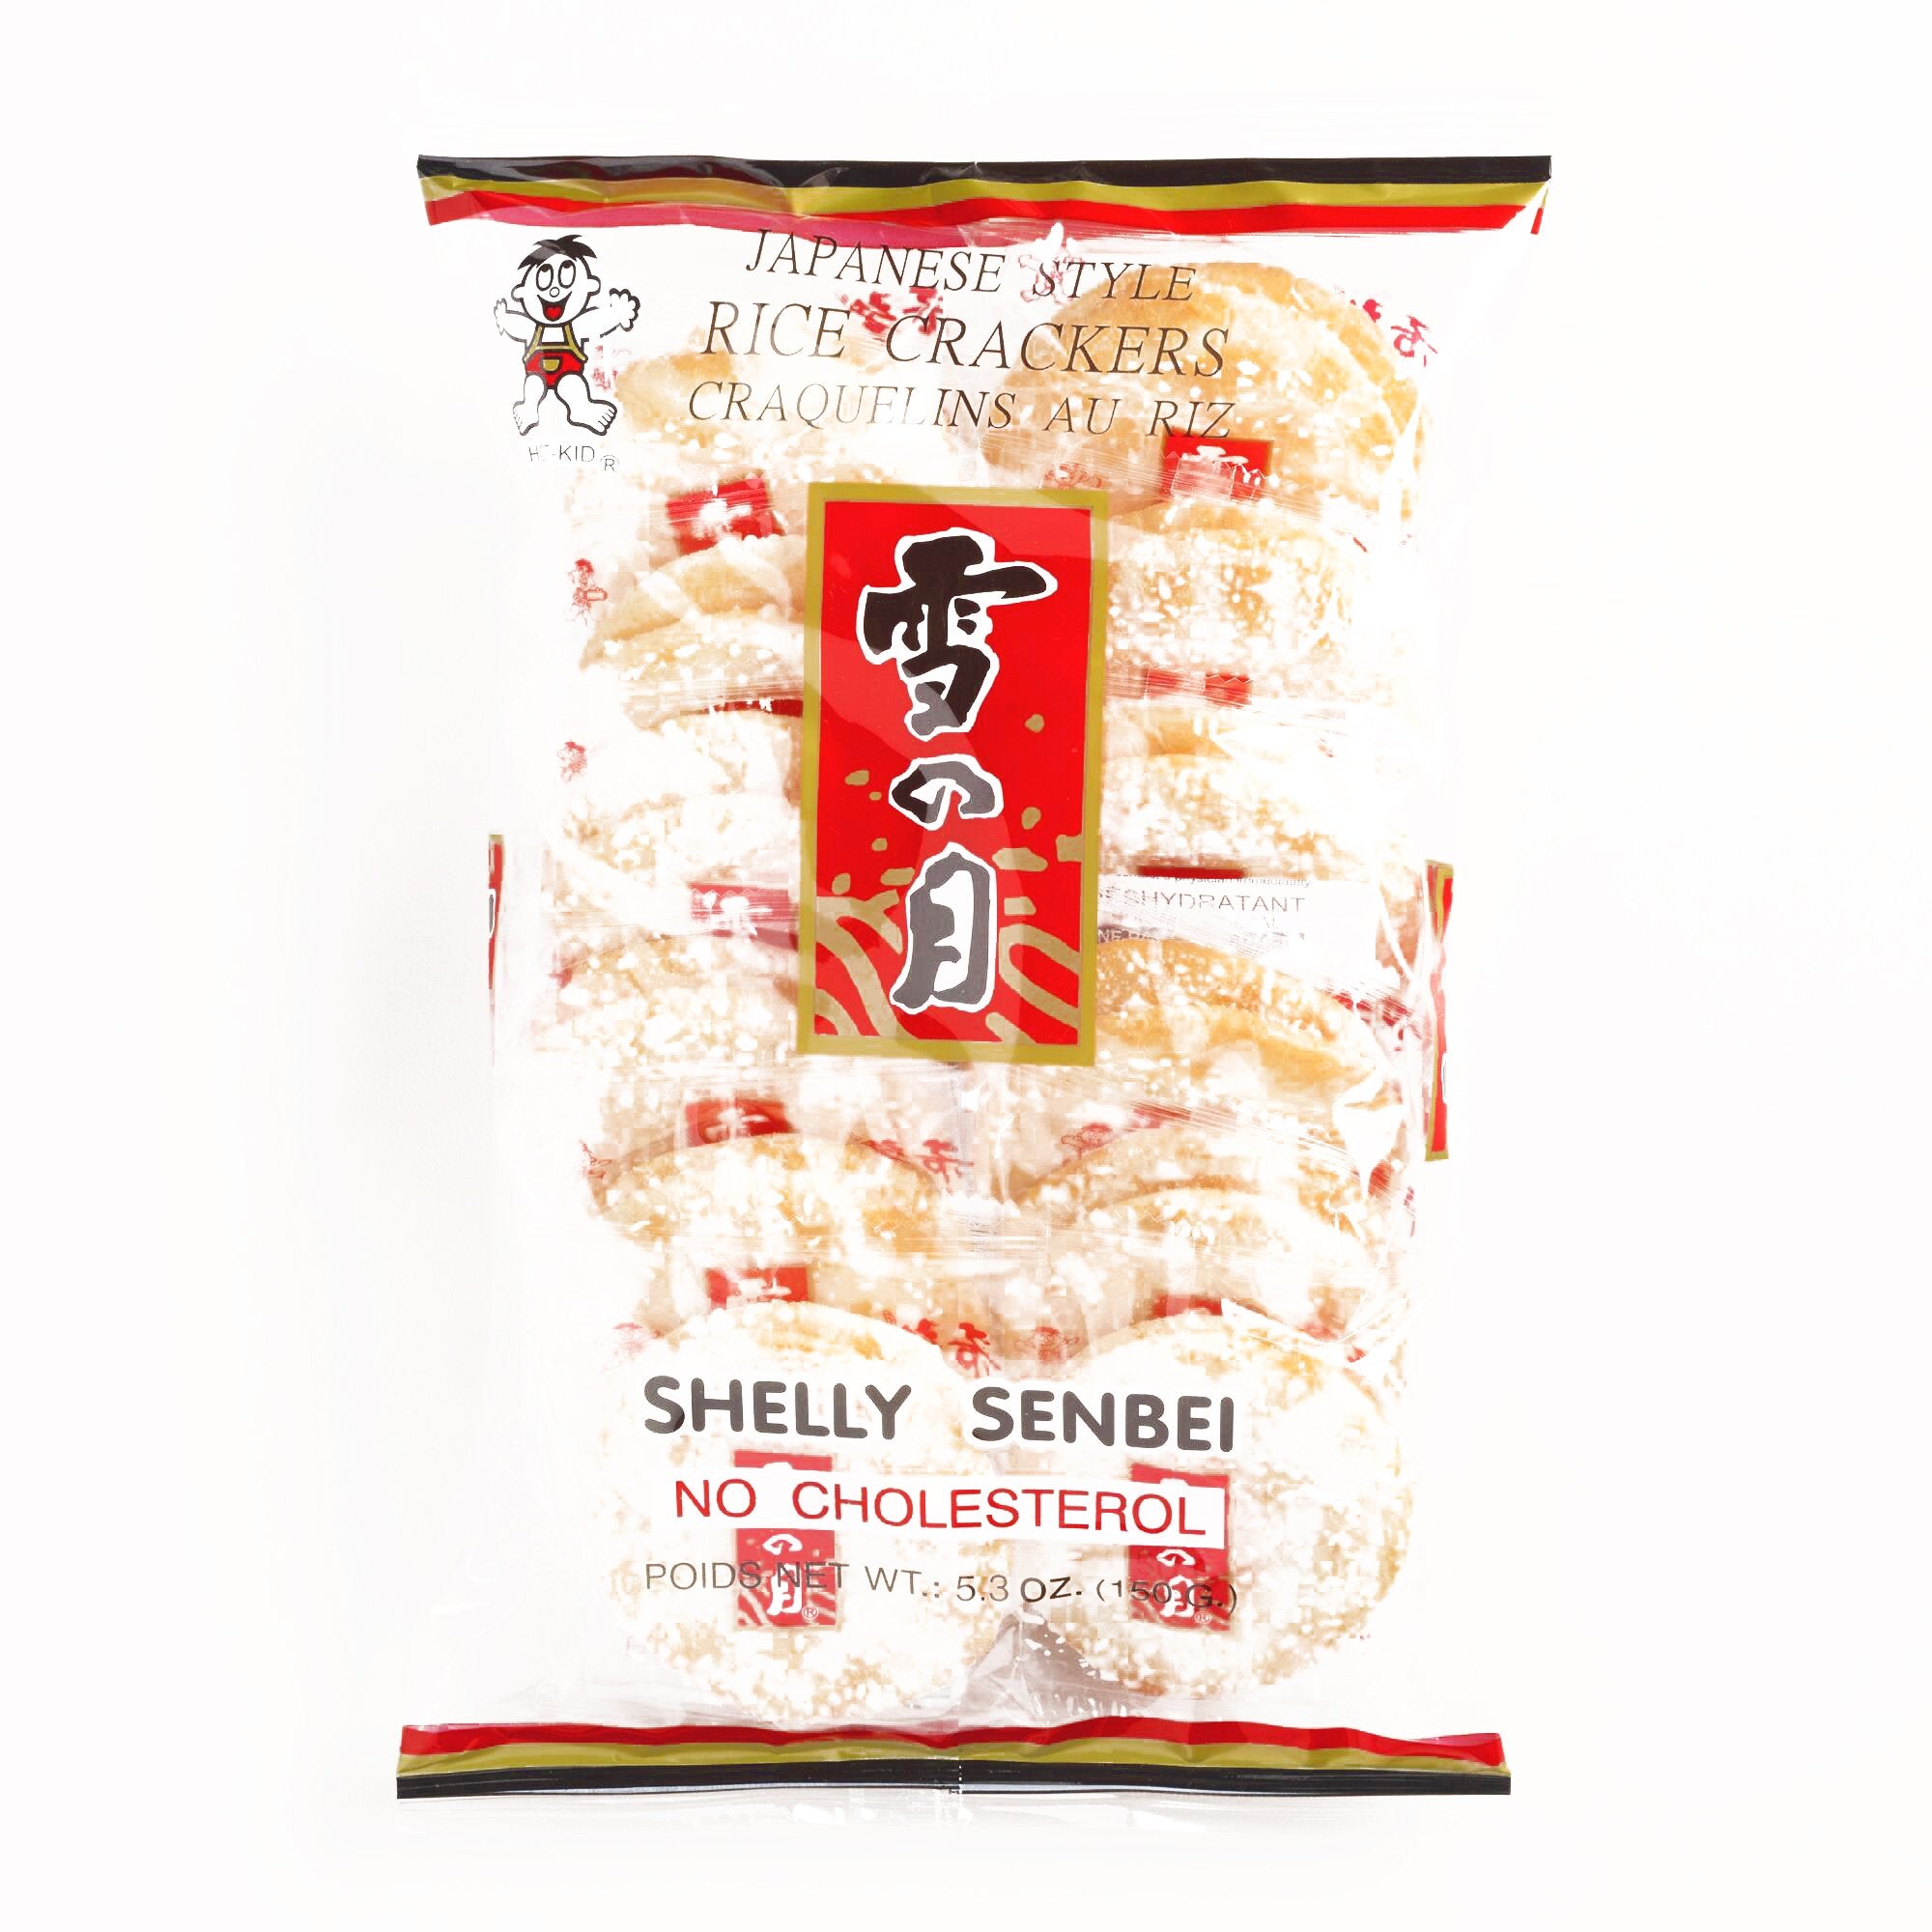 Shelly Senbei Japanese Rice Crackers 5.3 oz each (1 Item Per Order, not per case)